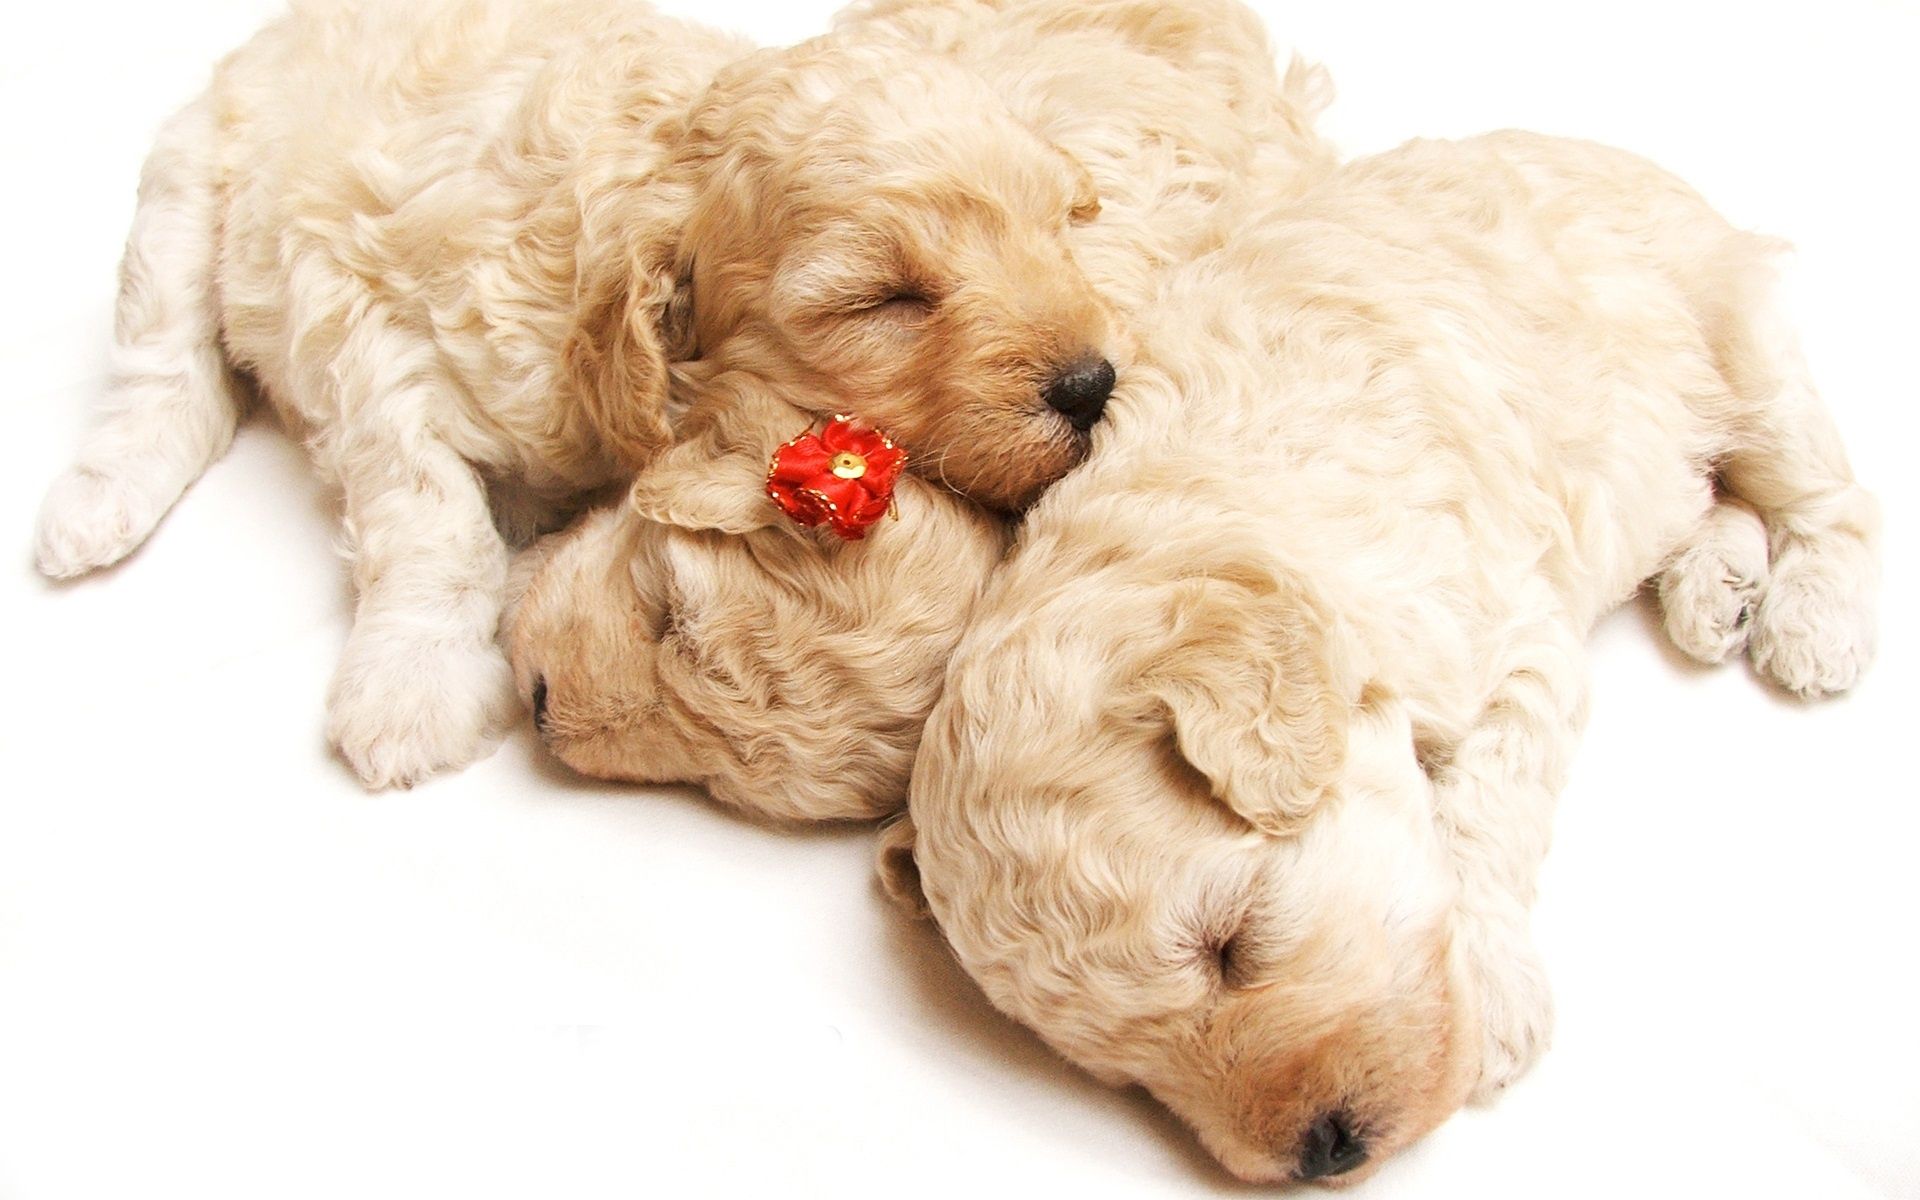 Cute Sleeping Puppies Wallpaper in jpg format for free download